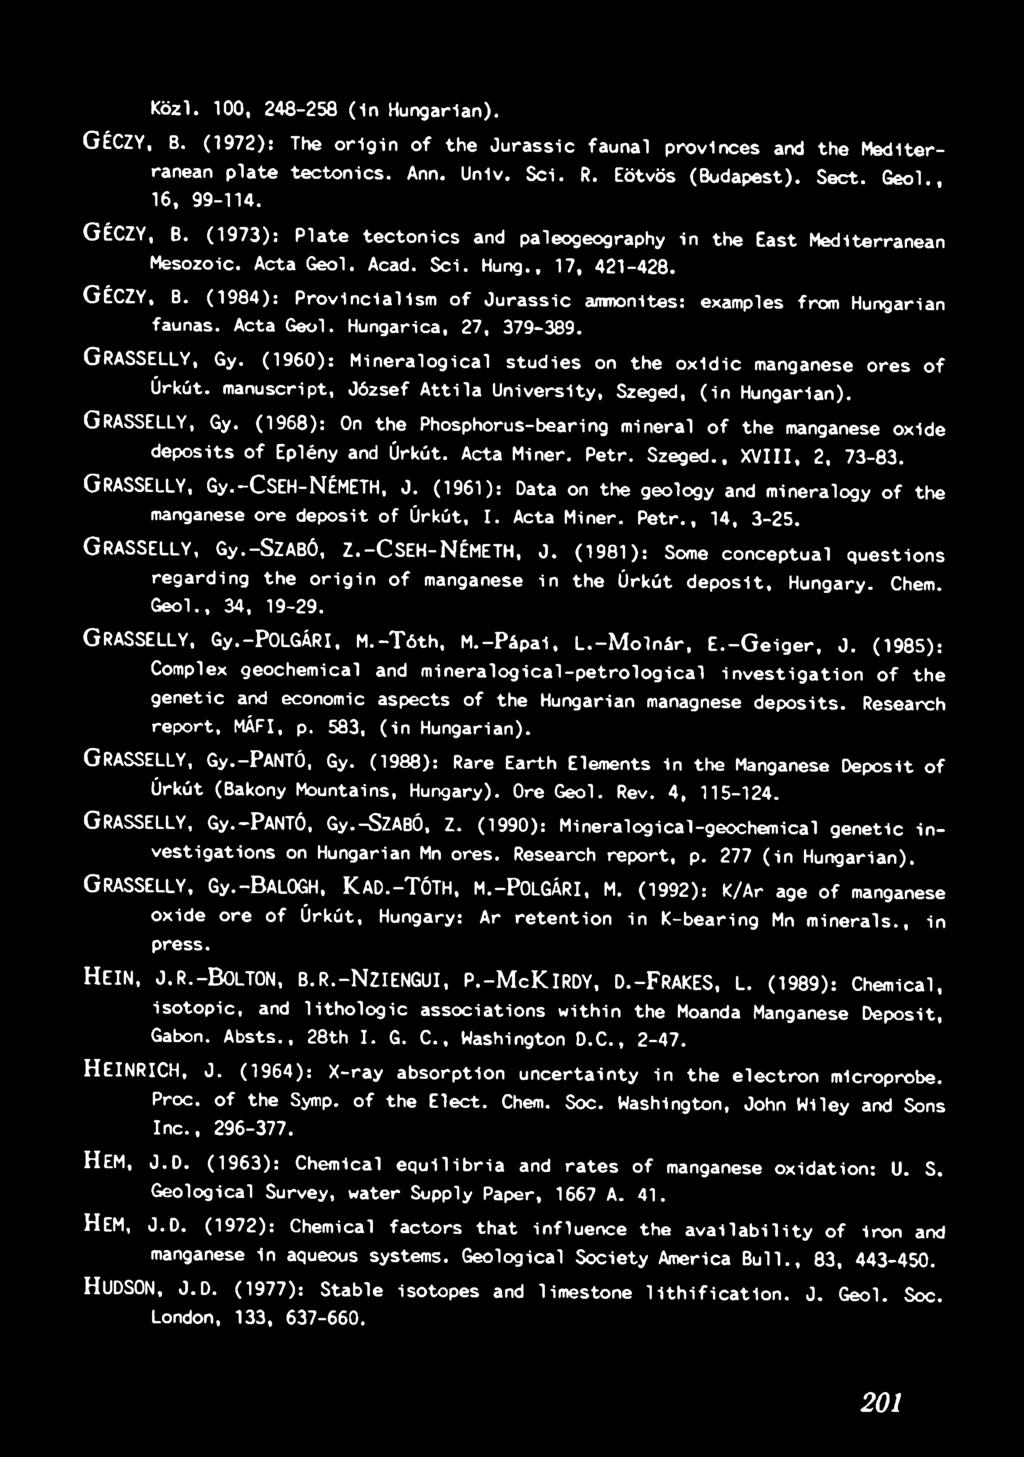 (1968): On th e Phosphorus-bearing m ineral o f th e manganese o xide d e p o s its o f Eplény and Úrkút. Acta M iner. P e tr. Szeged., XVIII, 2, 73-83. GRASSELLY, G y.-cseh-n ÉM ETH, J.